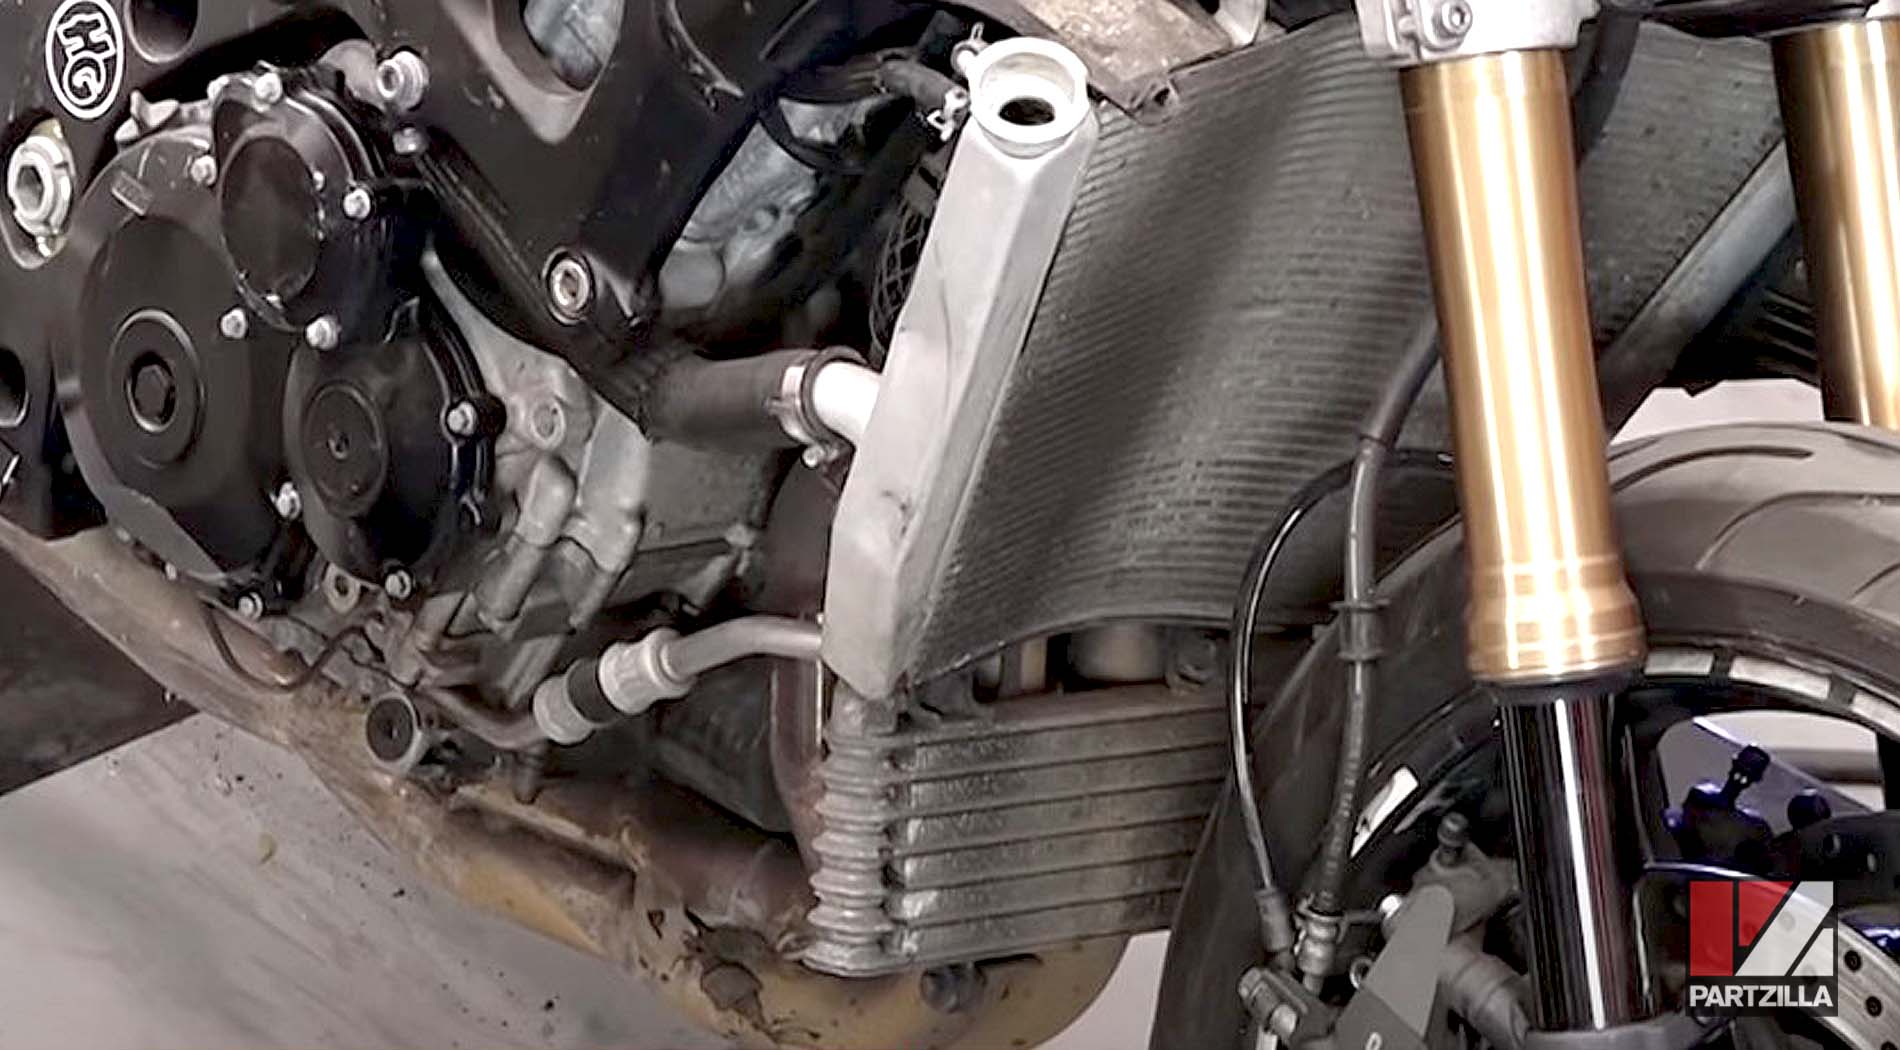 Motorcycle coolant leak causes bad radiator